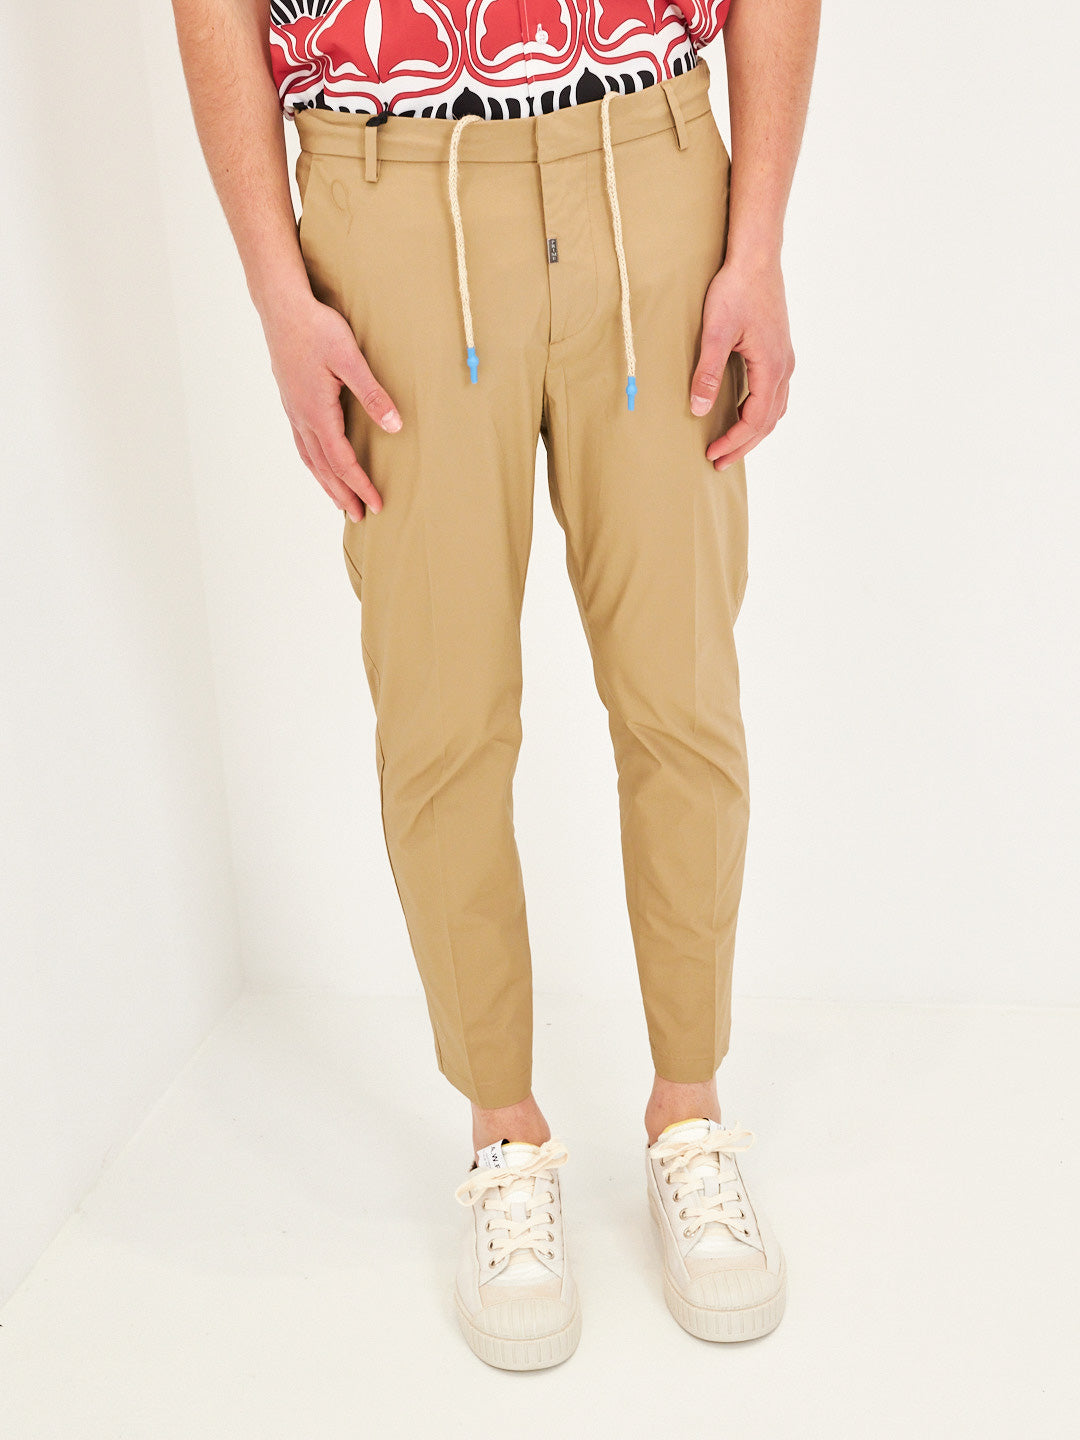 Prime trousers in dark beige cotton